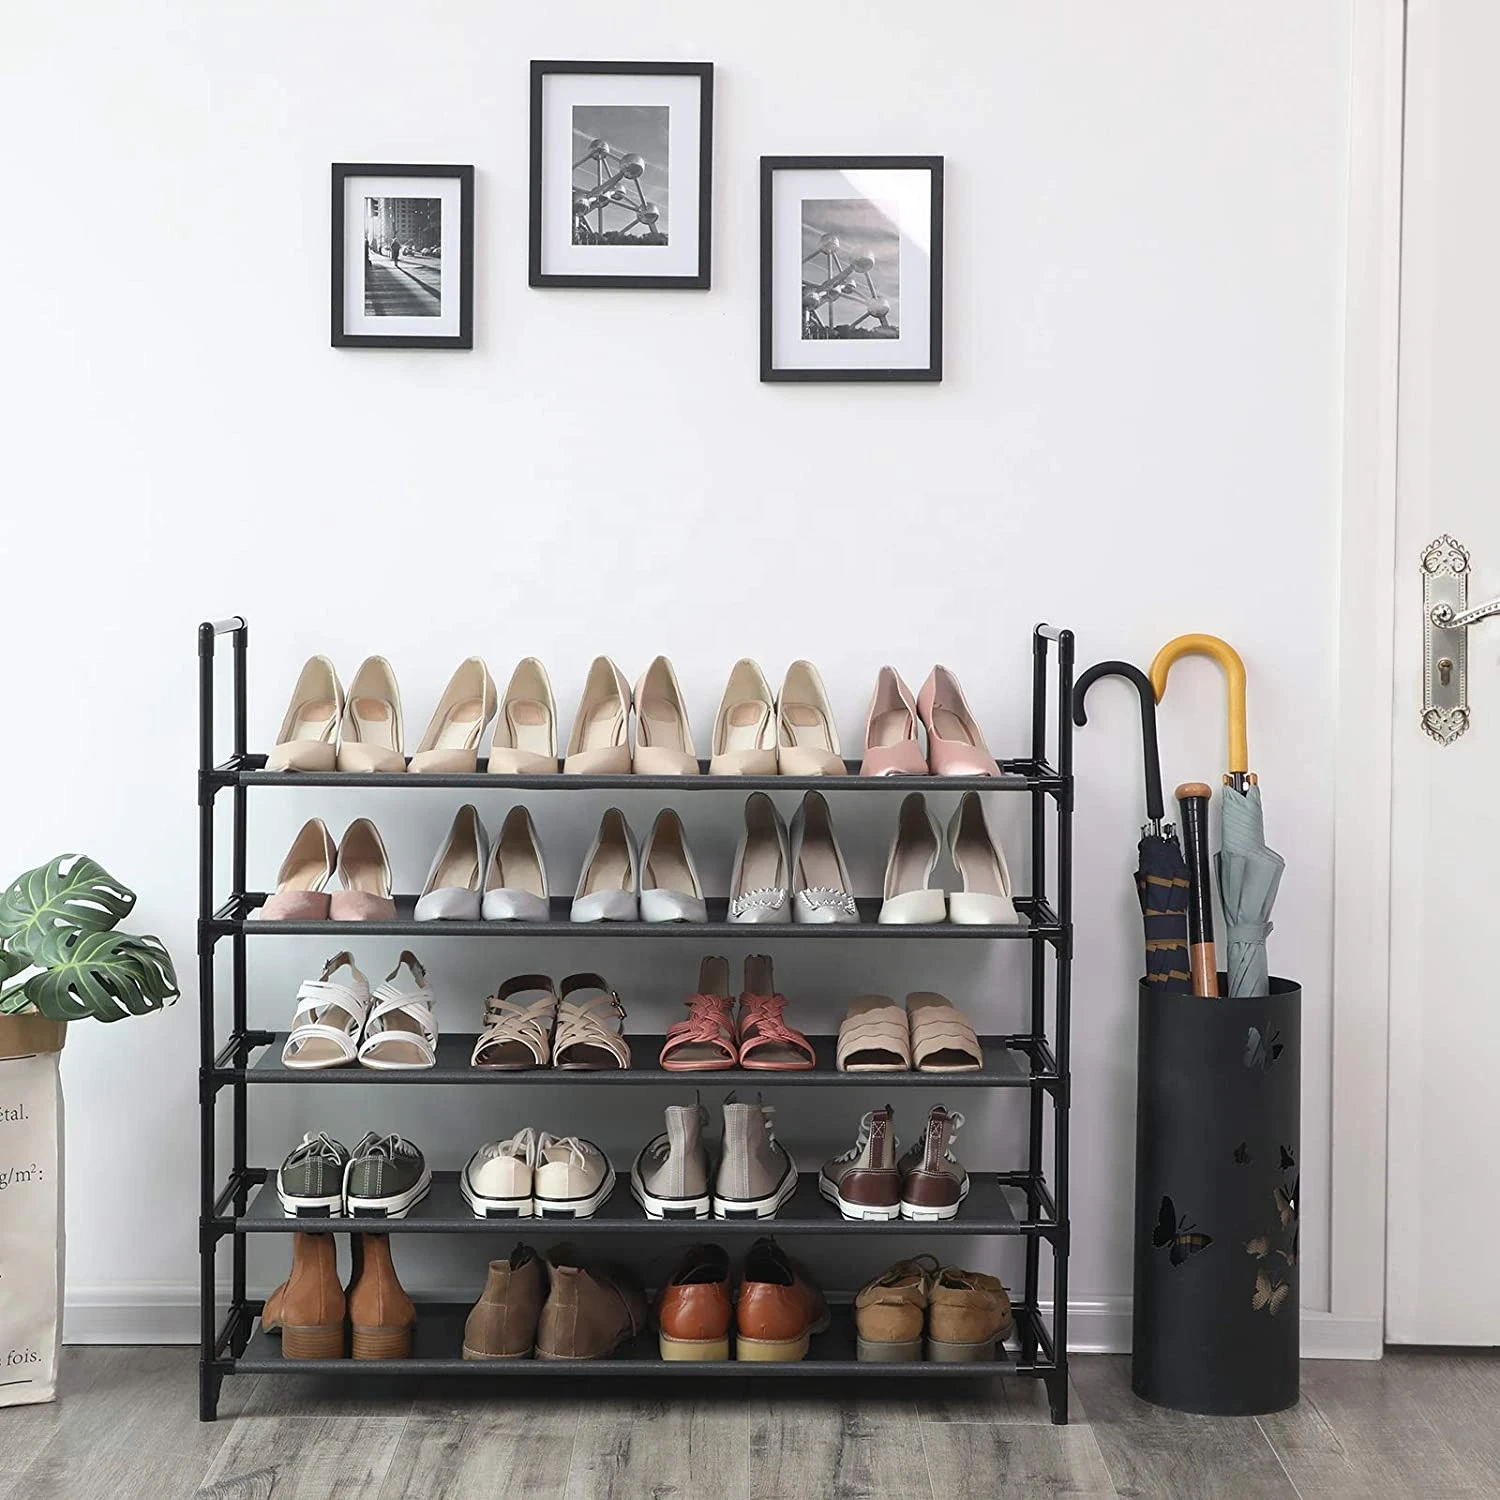 RackStorage Shoe Organizer Holds Hot Selling 5-tier 15 Pair Metal Shoe Rack Shelf Living Room Furniture Modern Iron